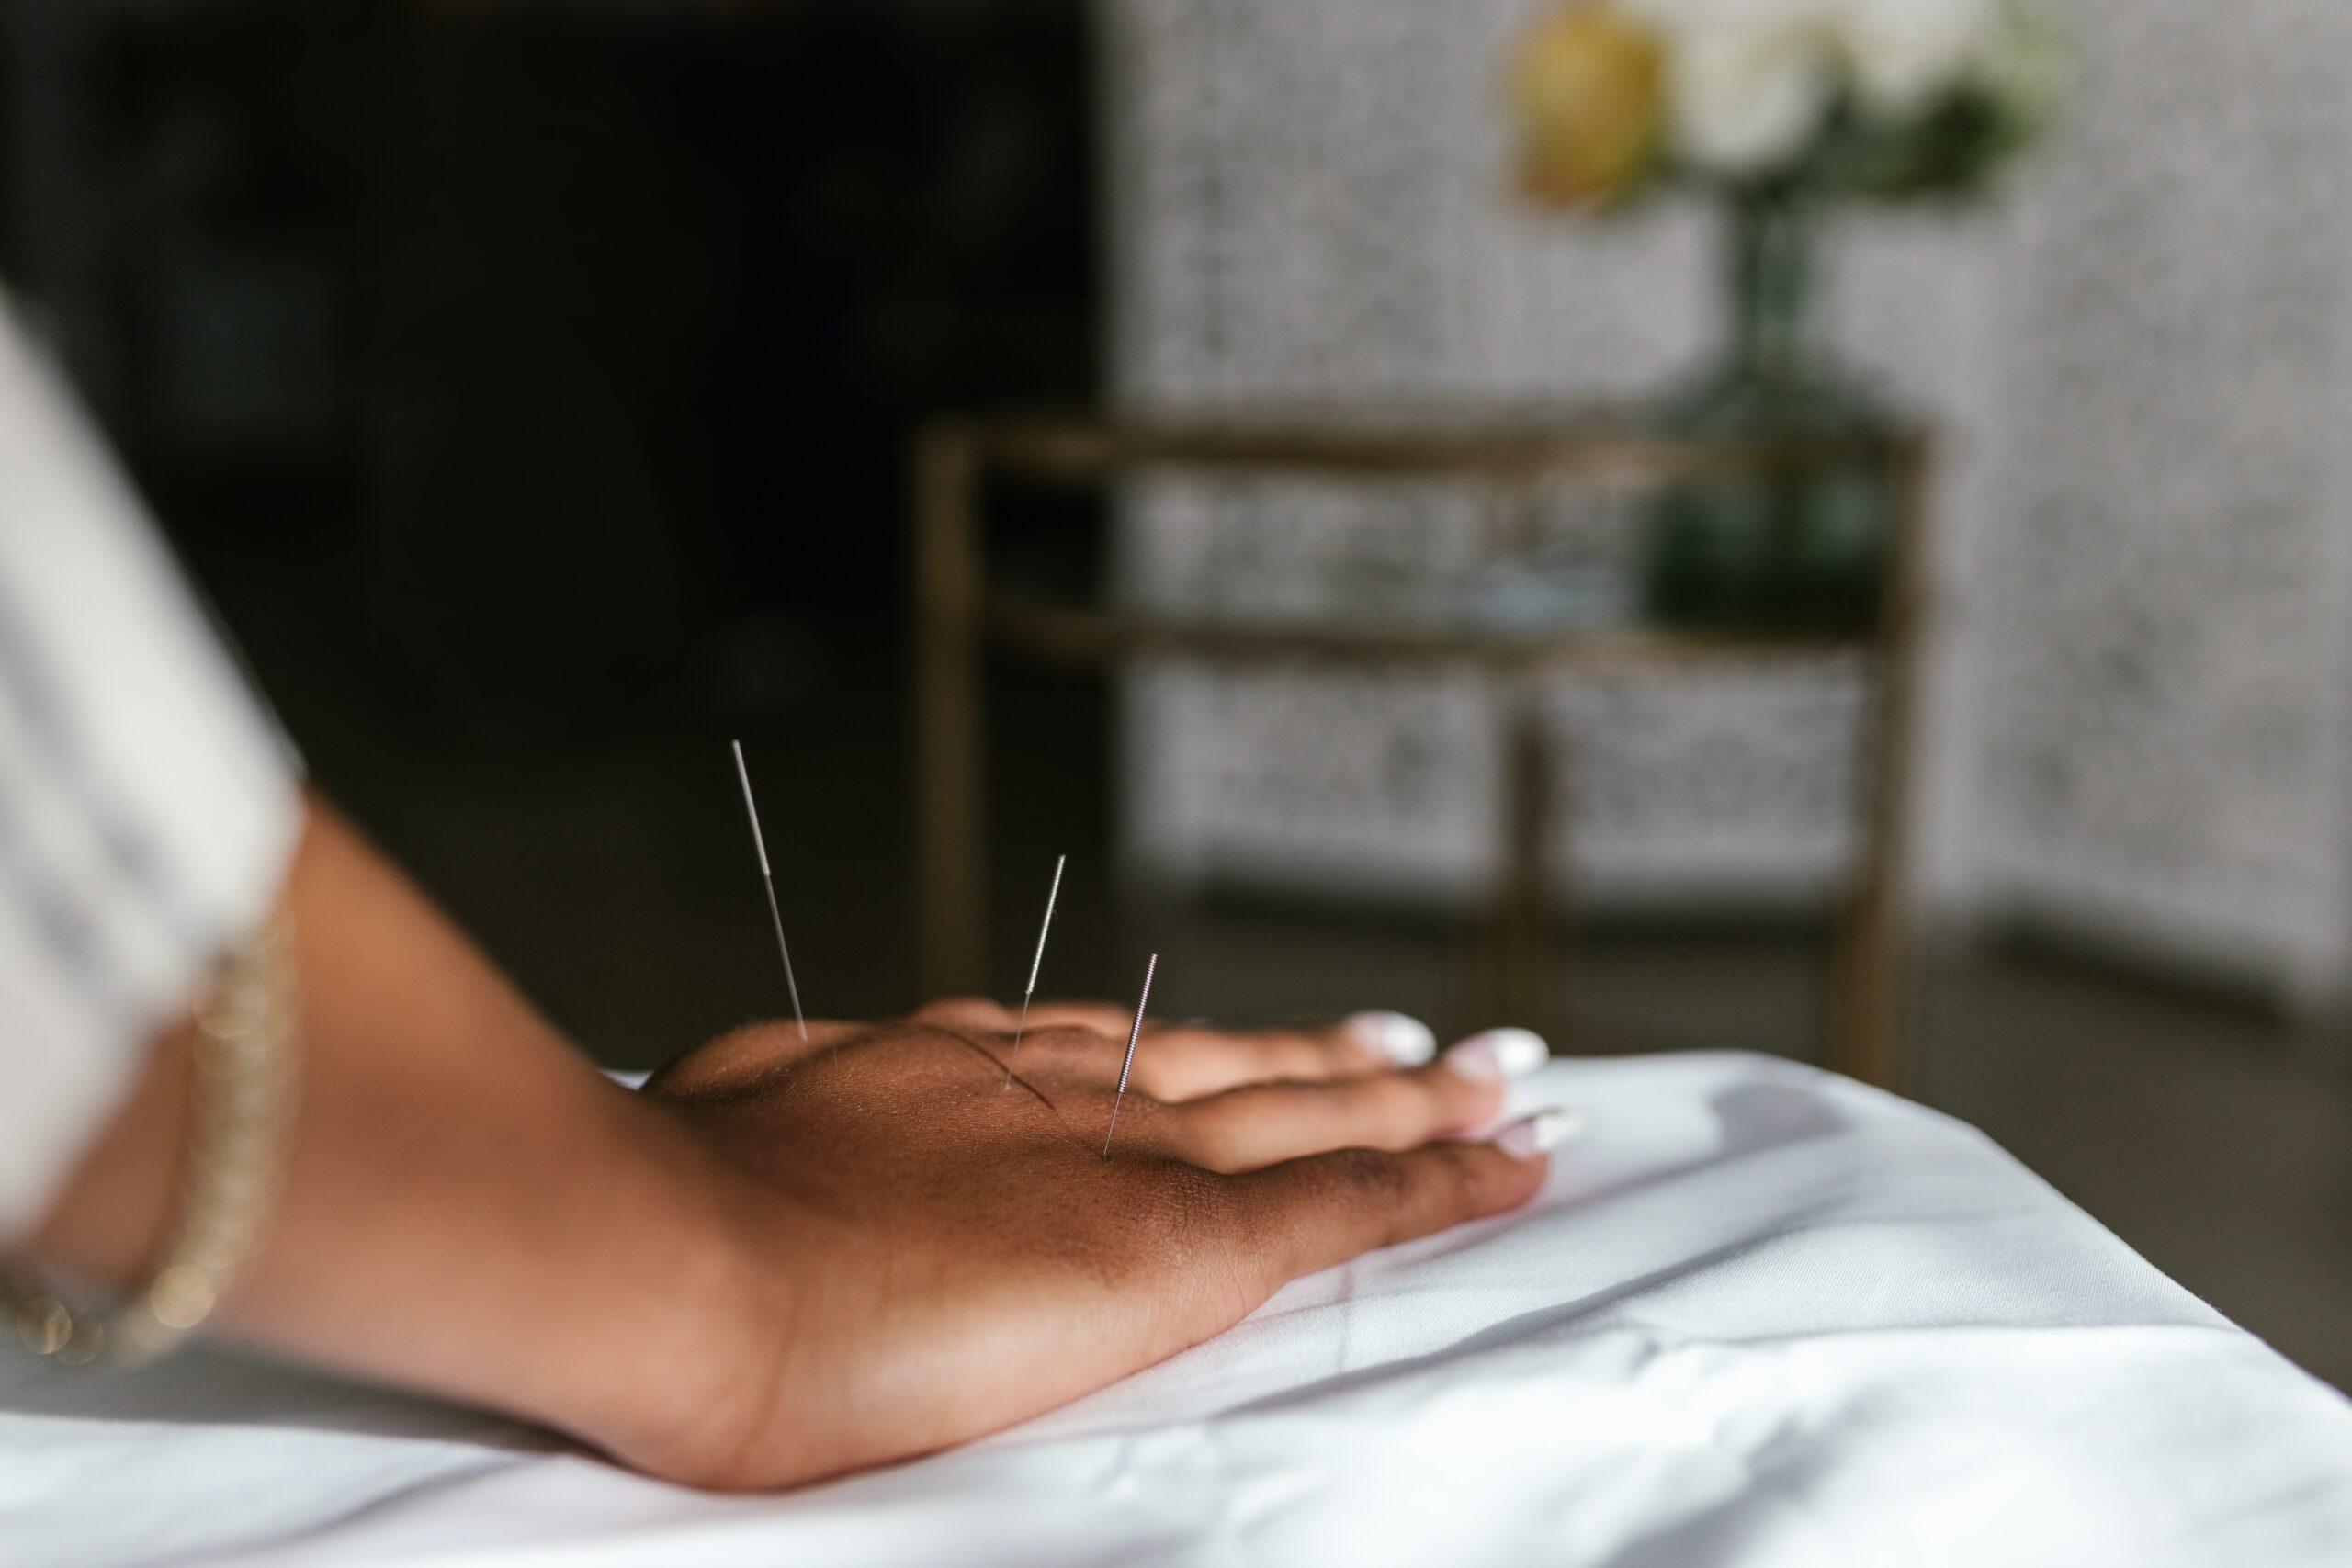 acupressure can also help you sleep